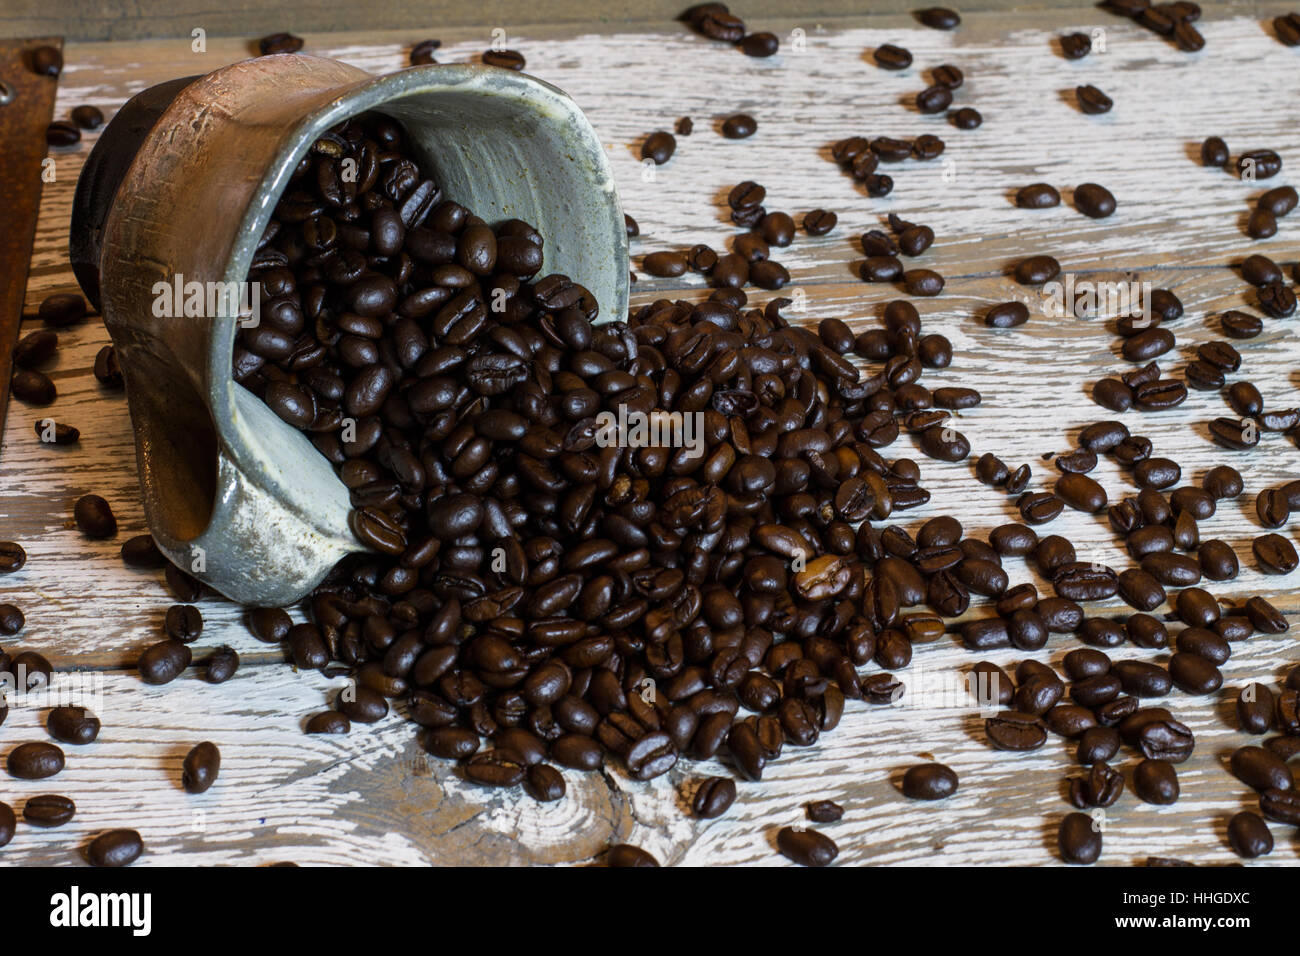 https://c8.alamy.com/comp/HHGDXC/coffee-beans-spilling-out-of-a-pretty-mug-onto-a-rustic-table-HHGDXC.jpg